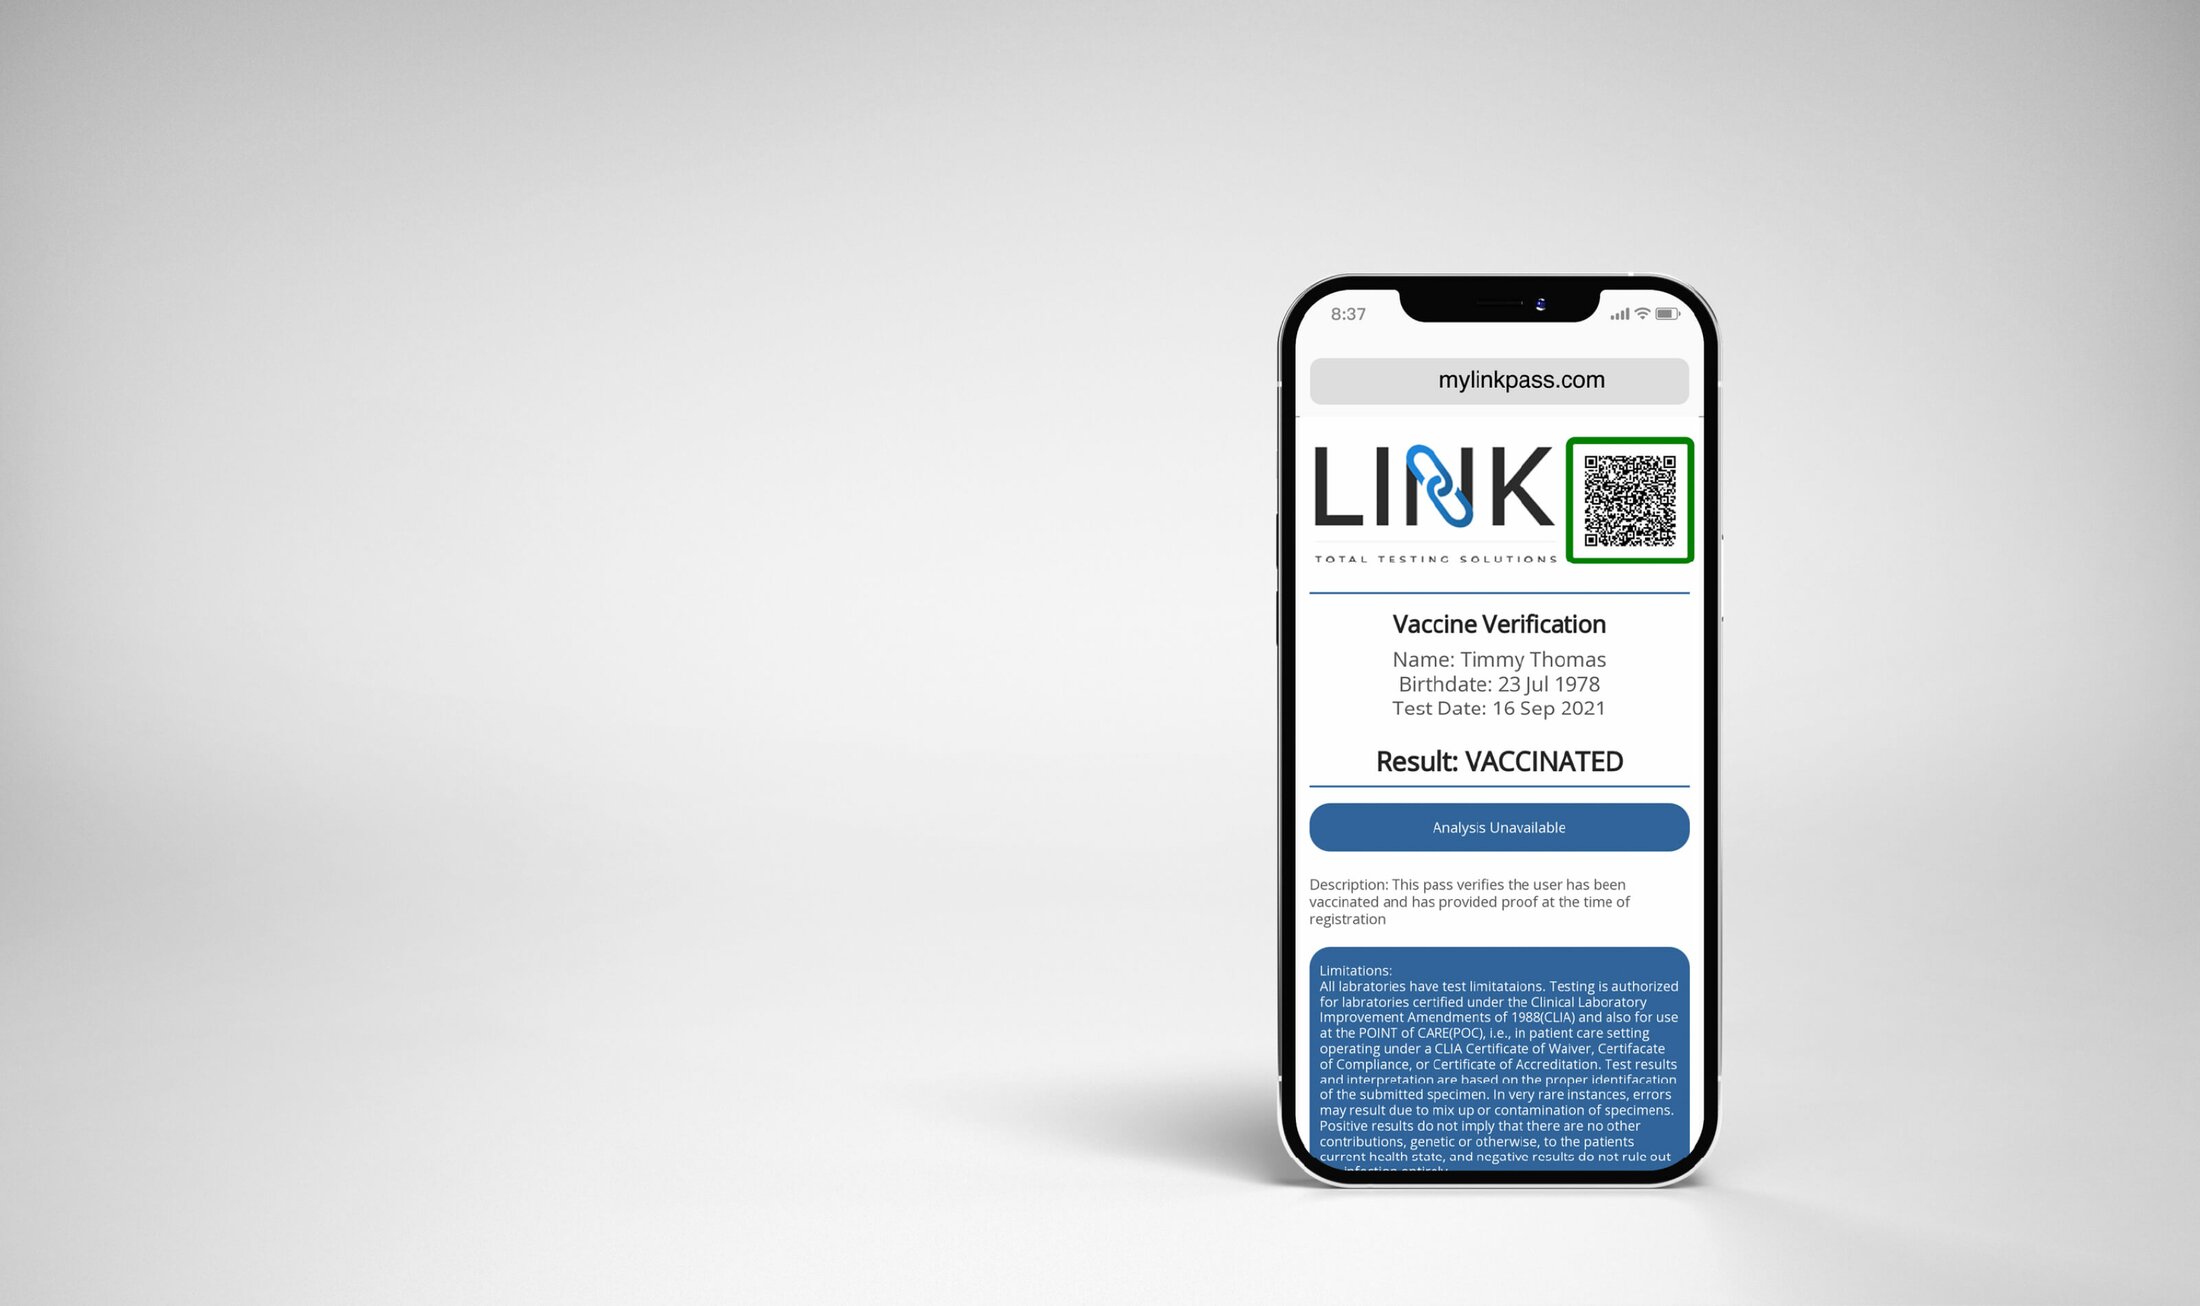 Link app displayed on phone screen